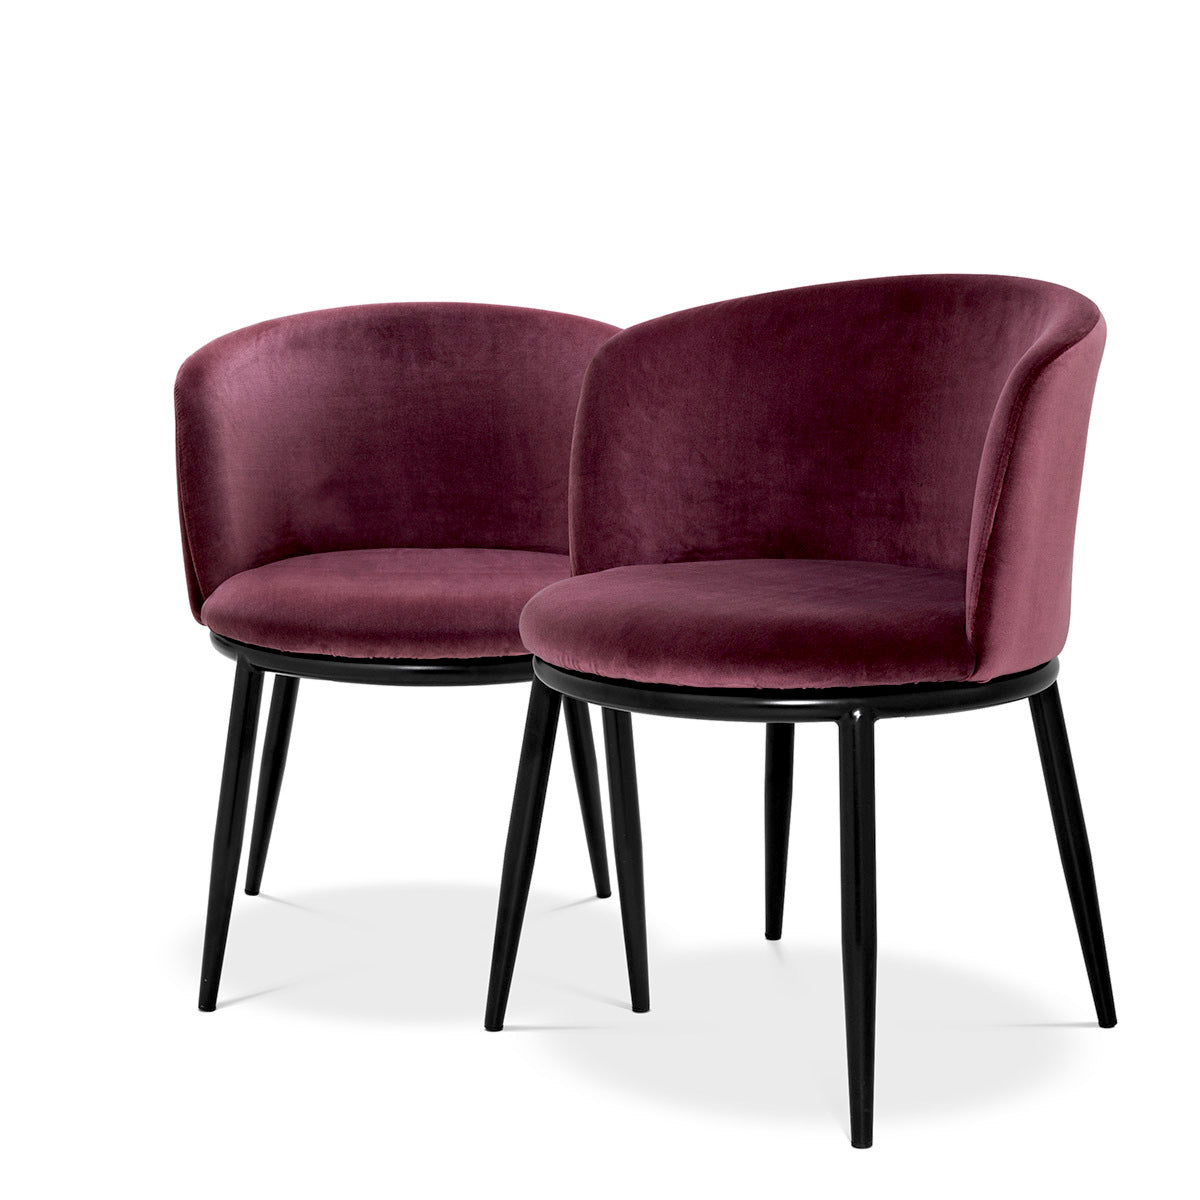 Dining chair Eichholtz Filmore cameron purple